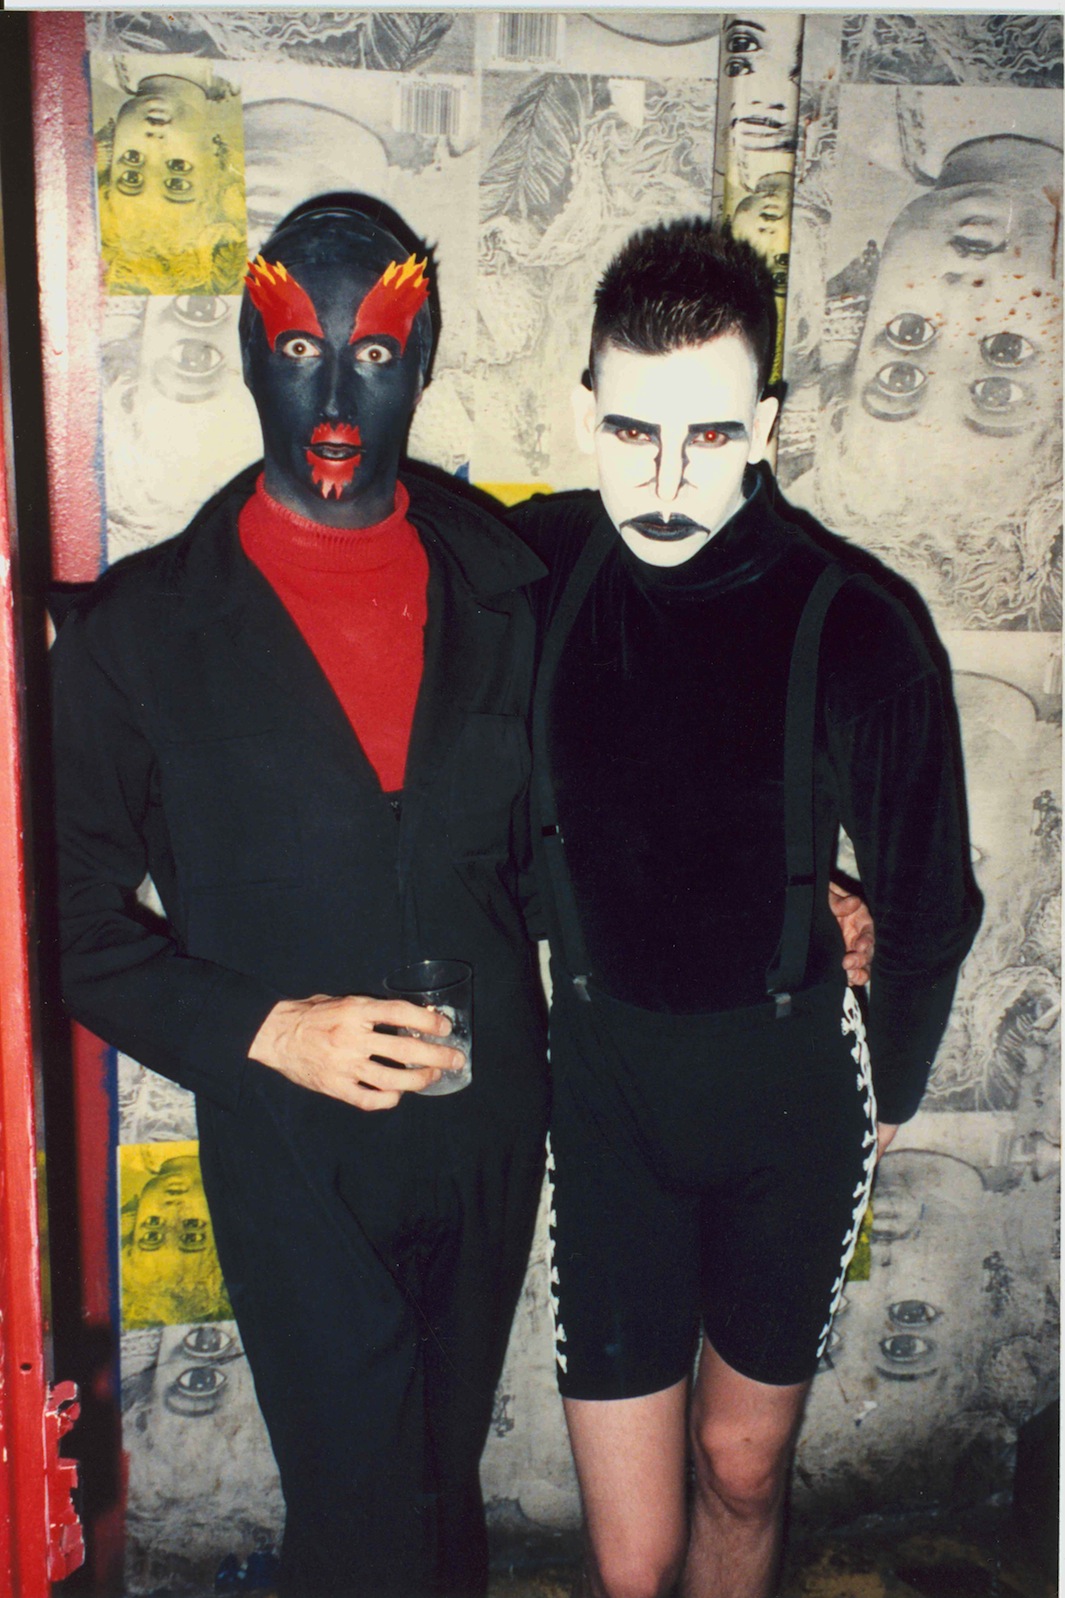 Club kids Keda, left, and Sacred Boy at the Limelight nightclub, 1992.